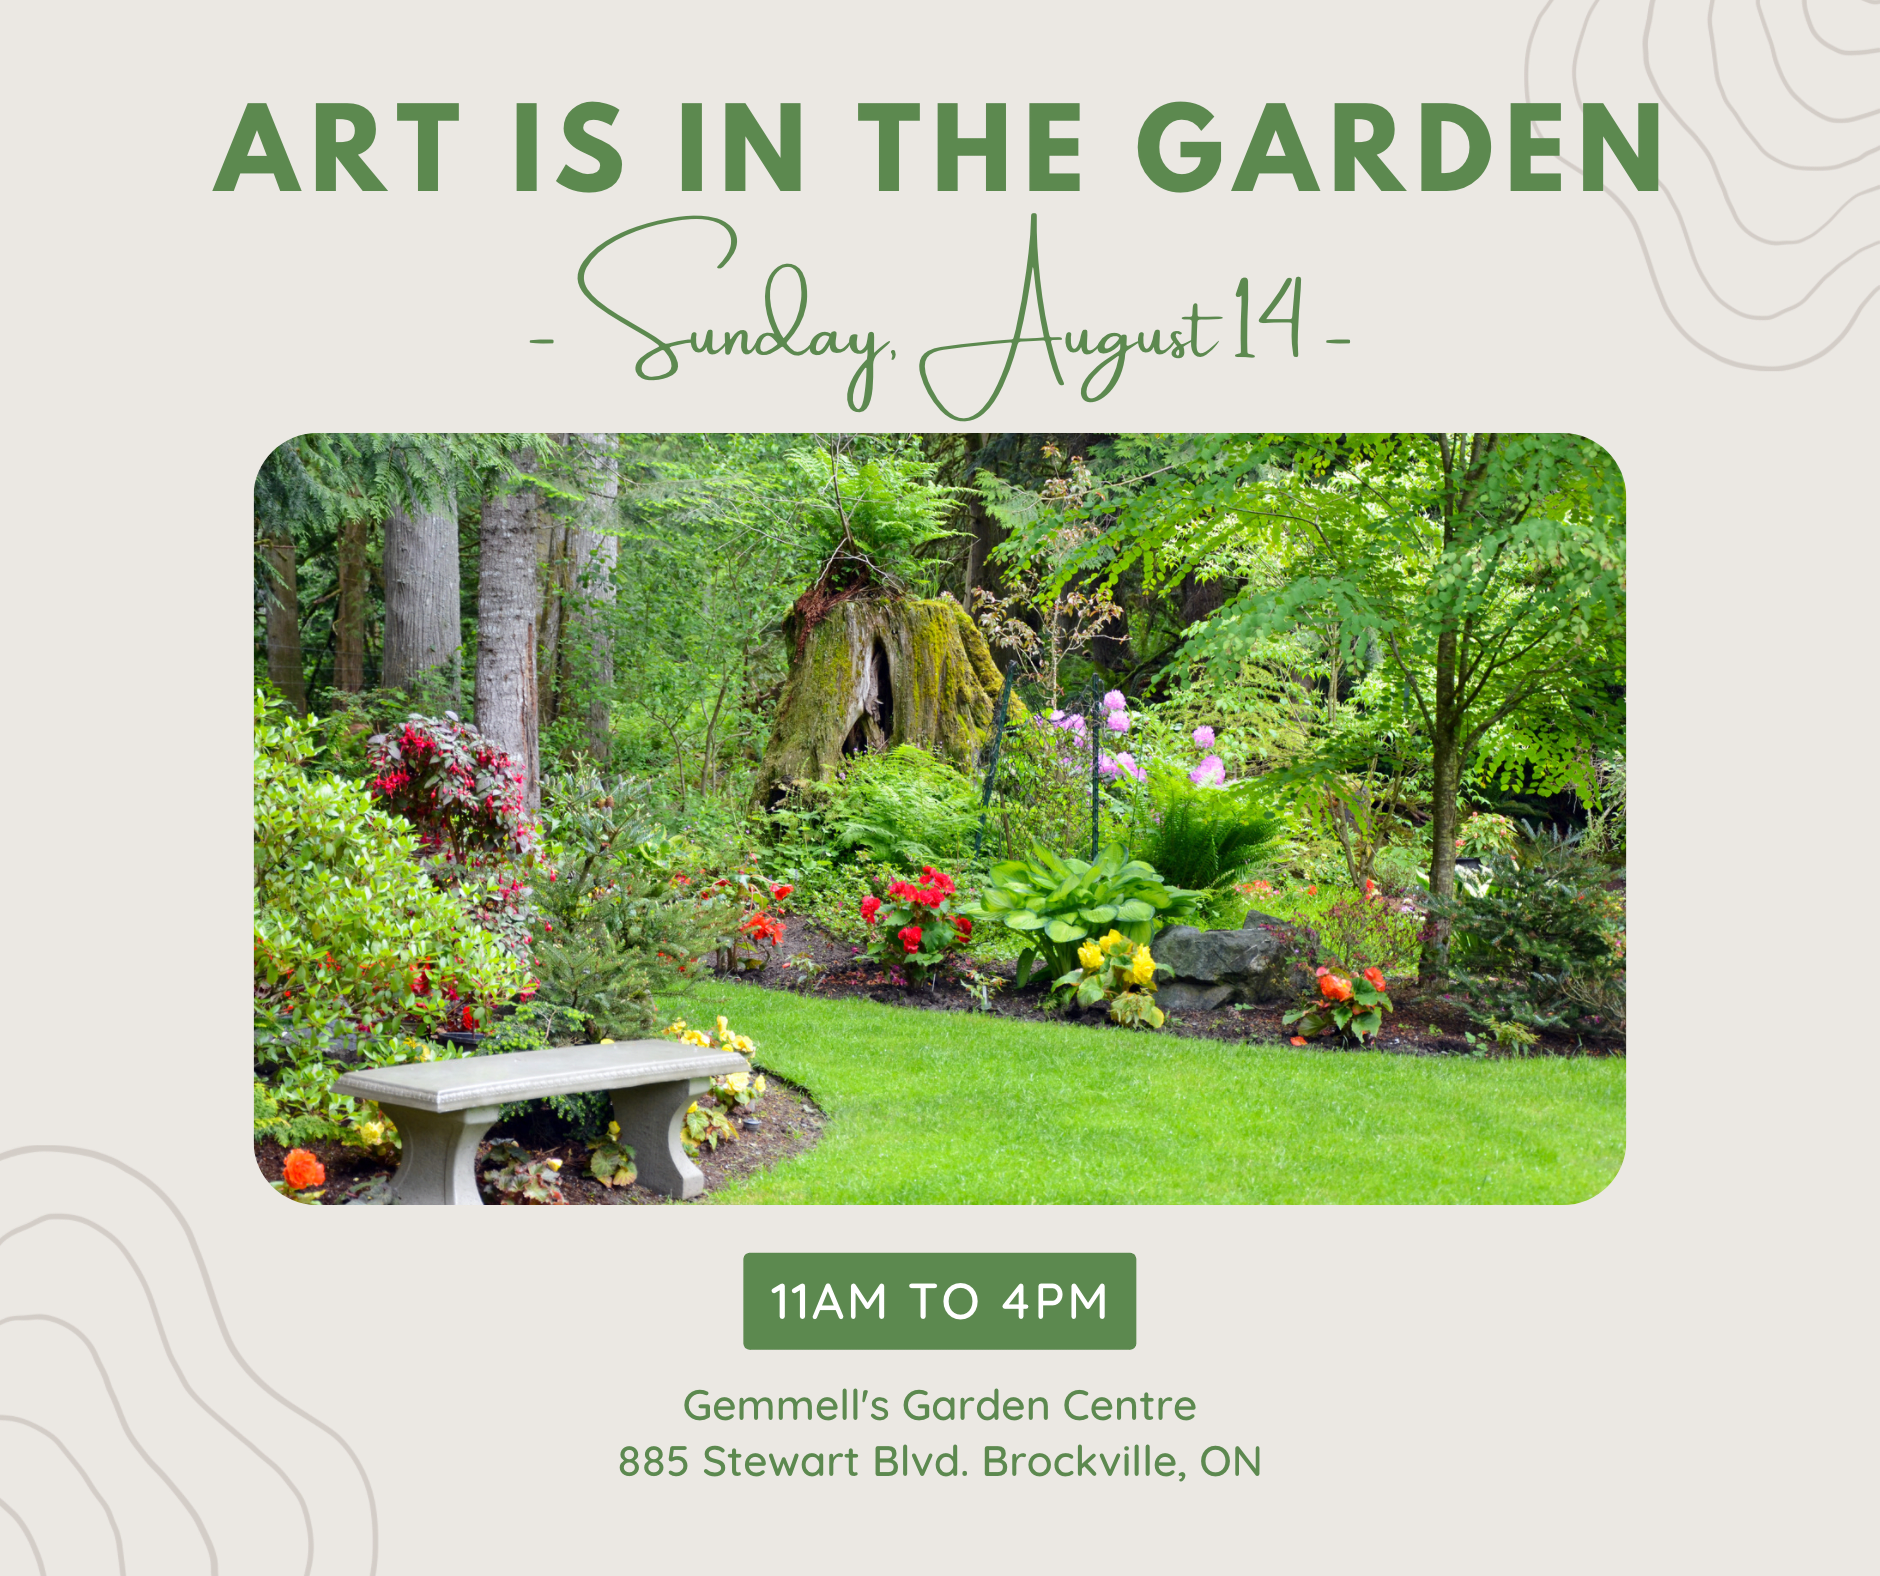 Art In the Garden Brockville Gemmell's Garden Centre 11am to 4pm